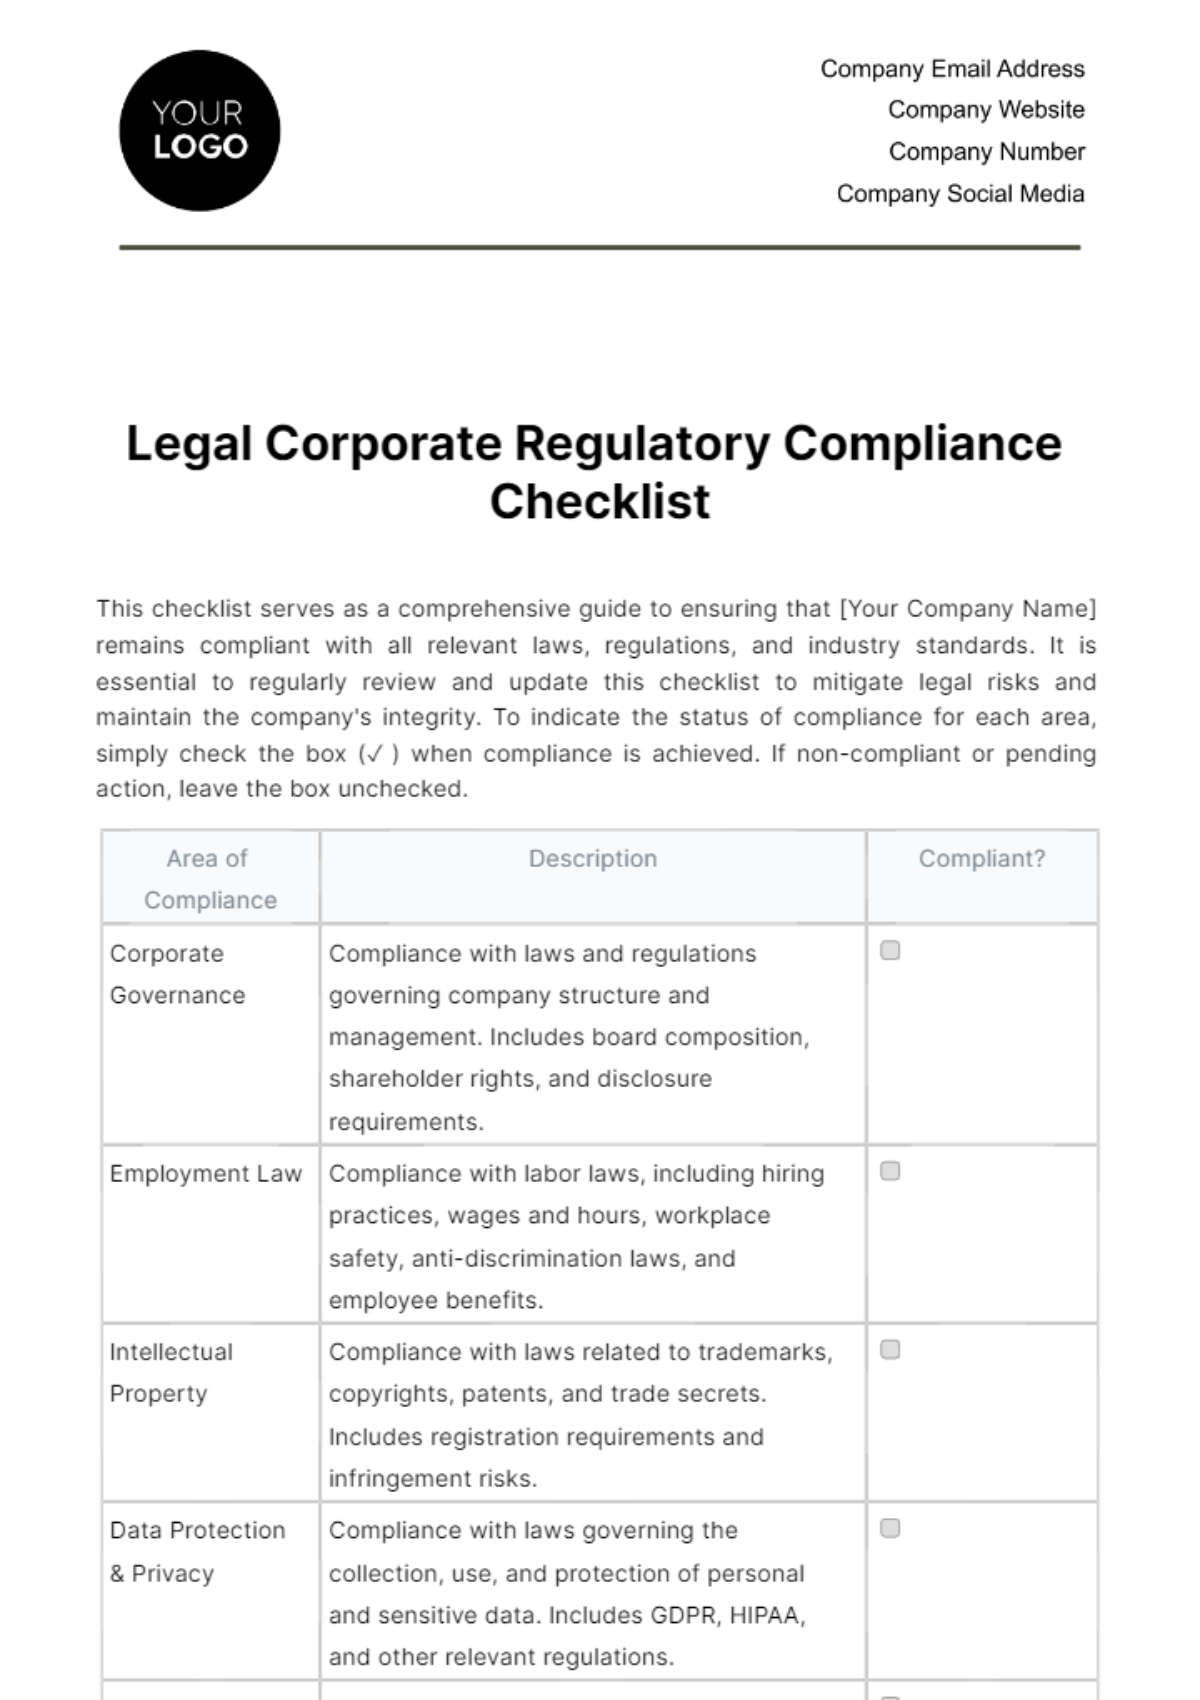 Free Legal Corporate Regulatory Compliance Checklist Template